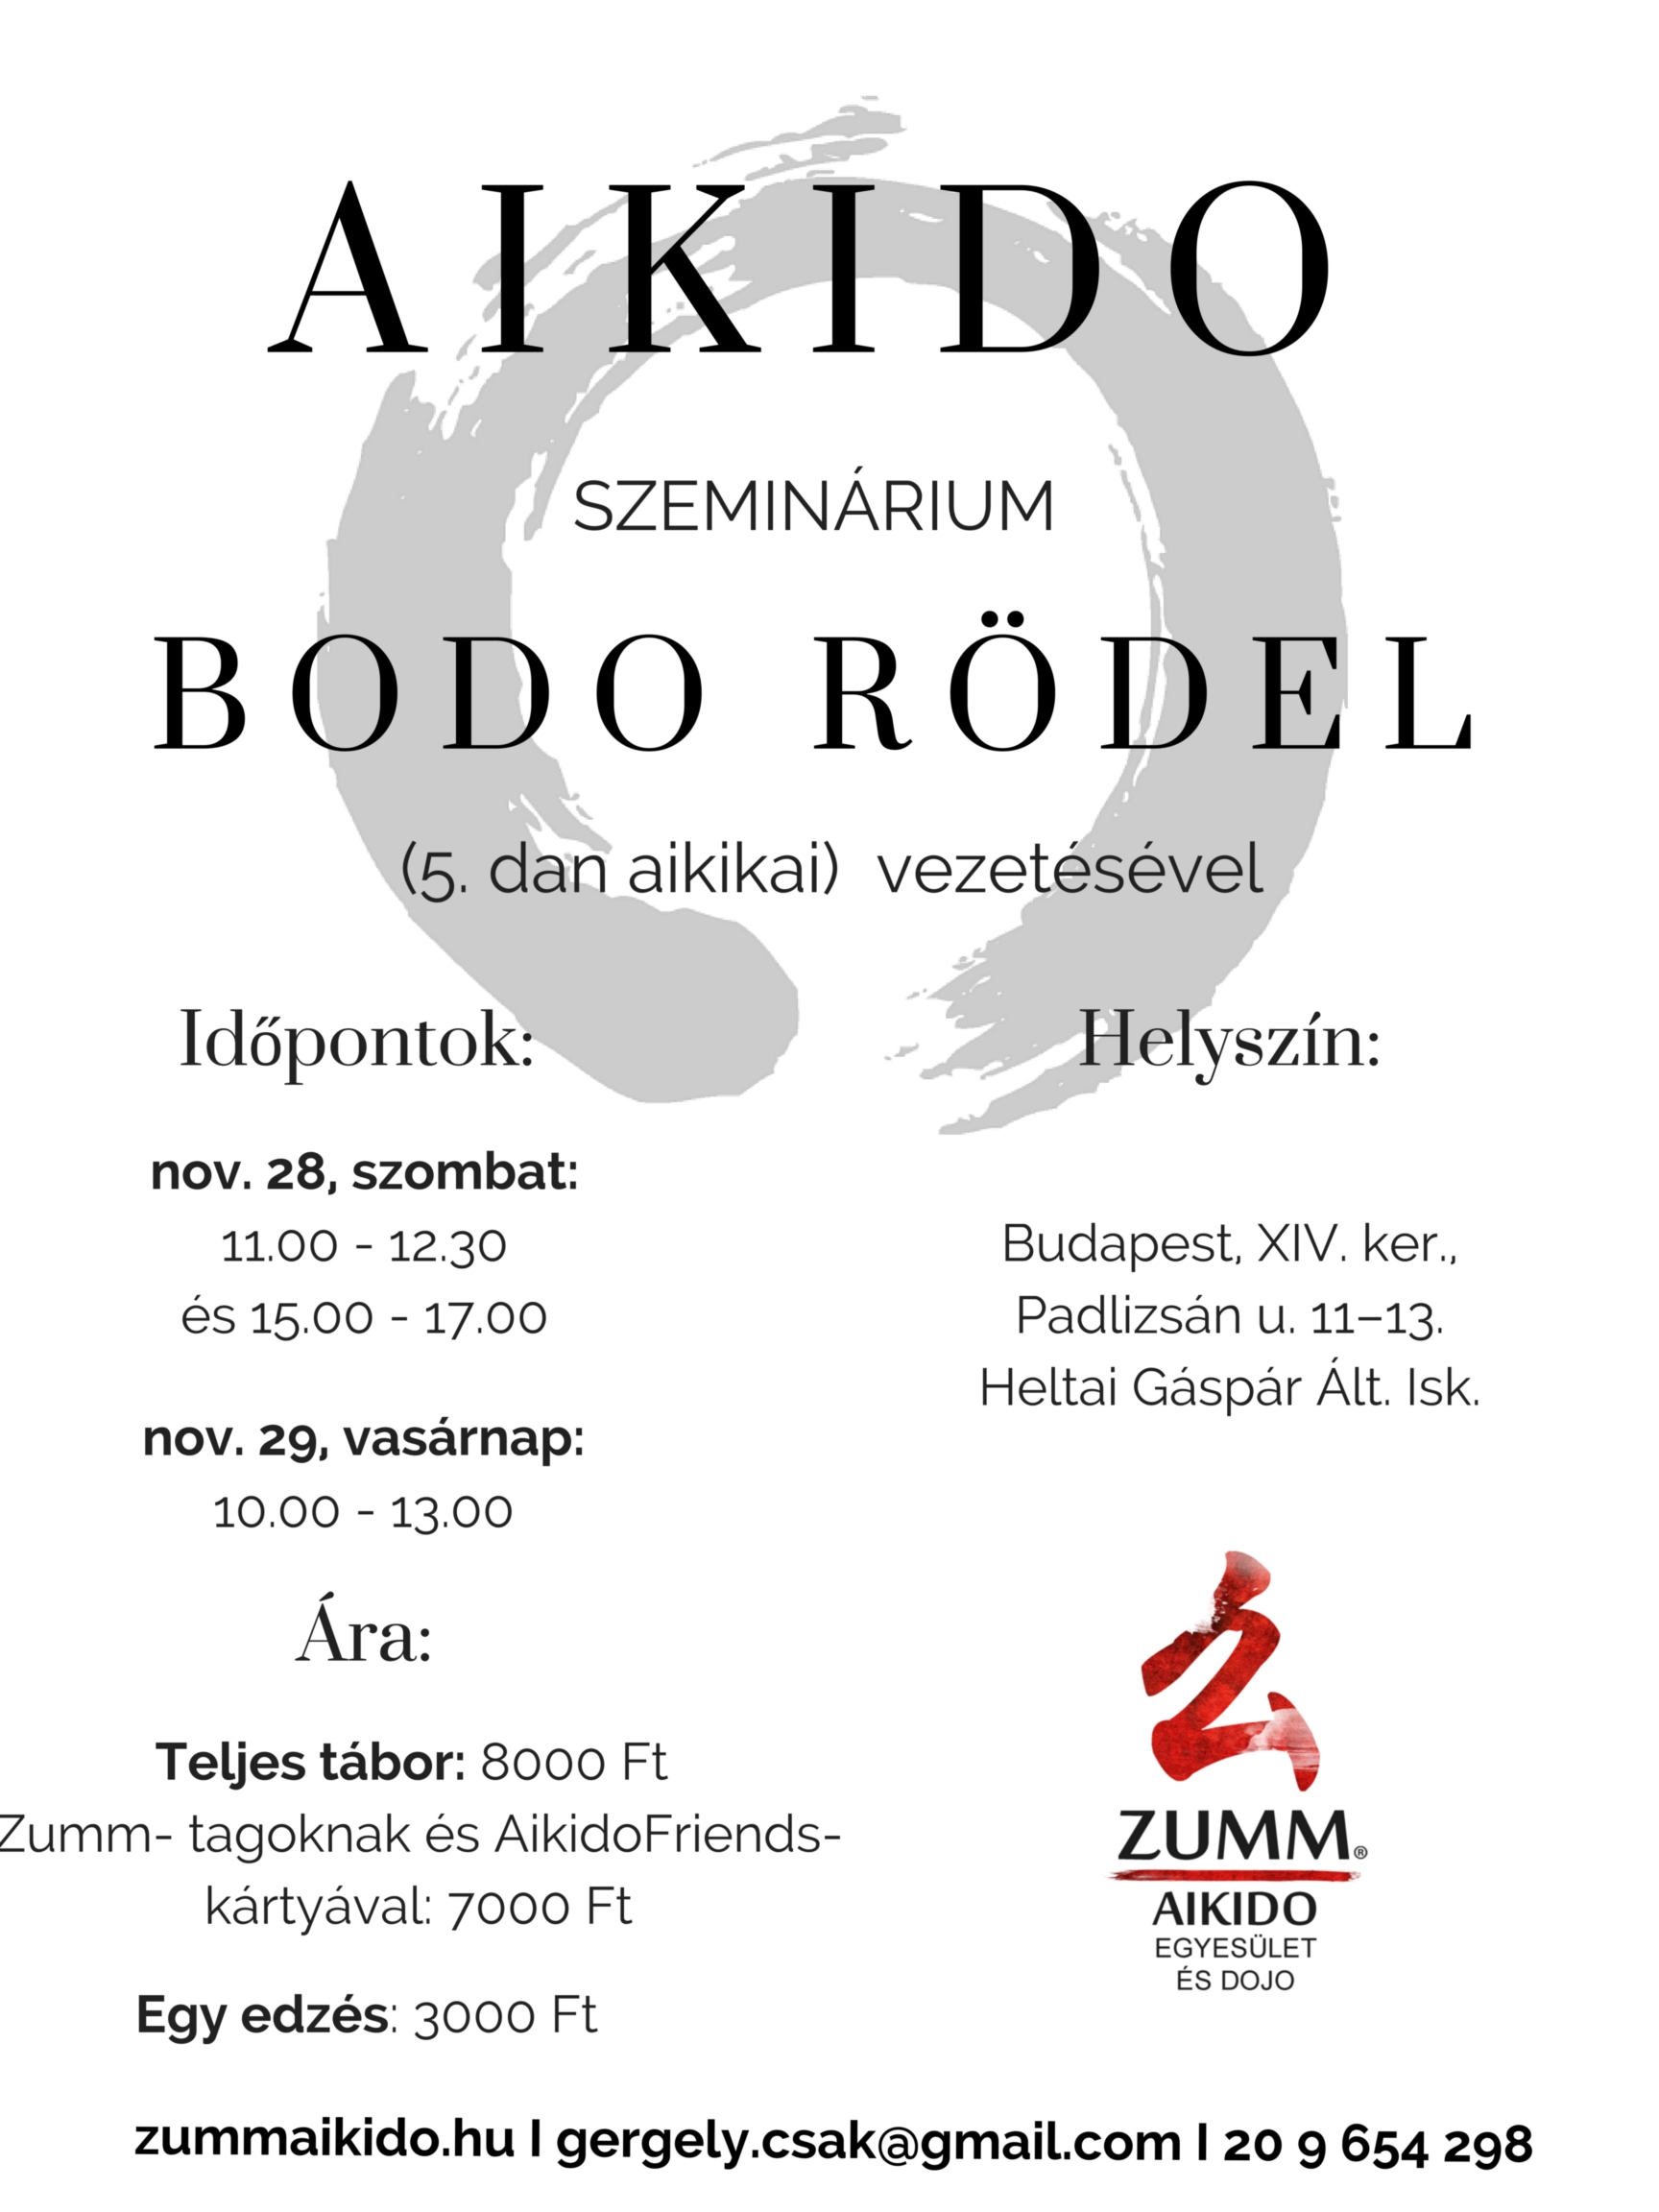 Bodo Rödel aikido edzőtábor